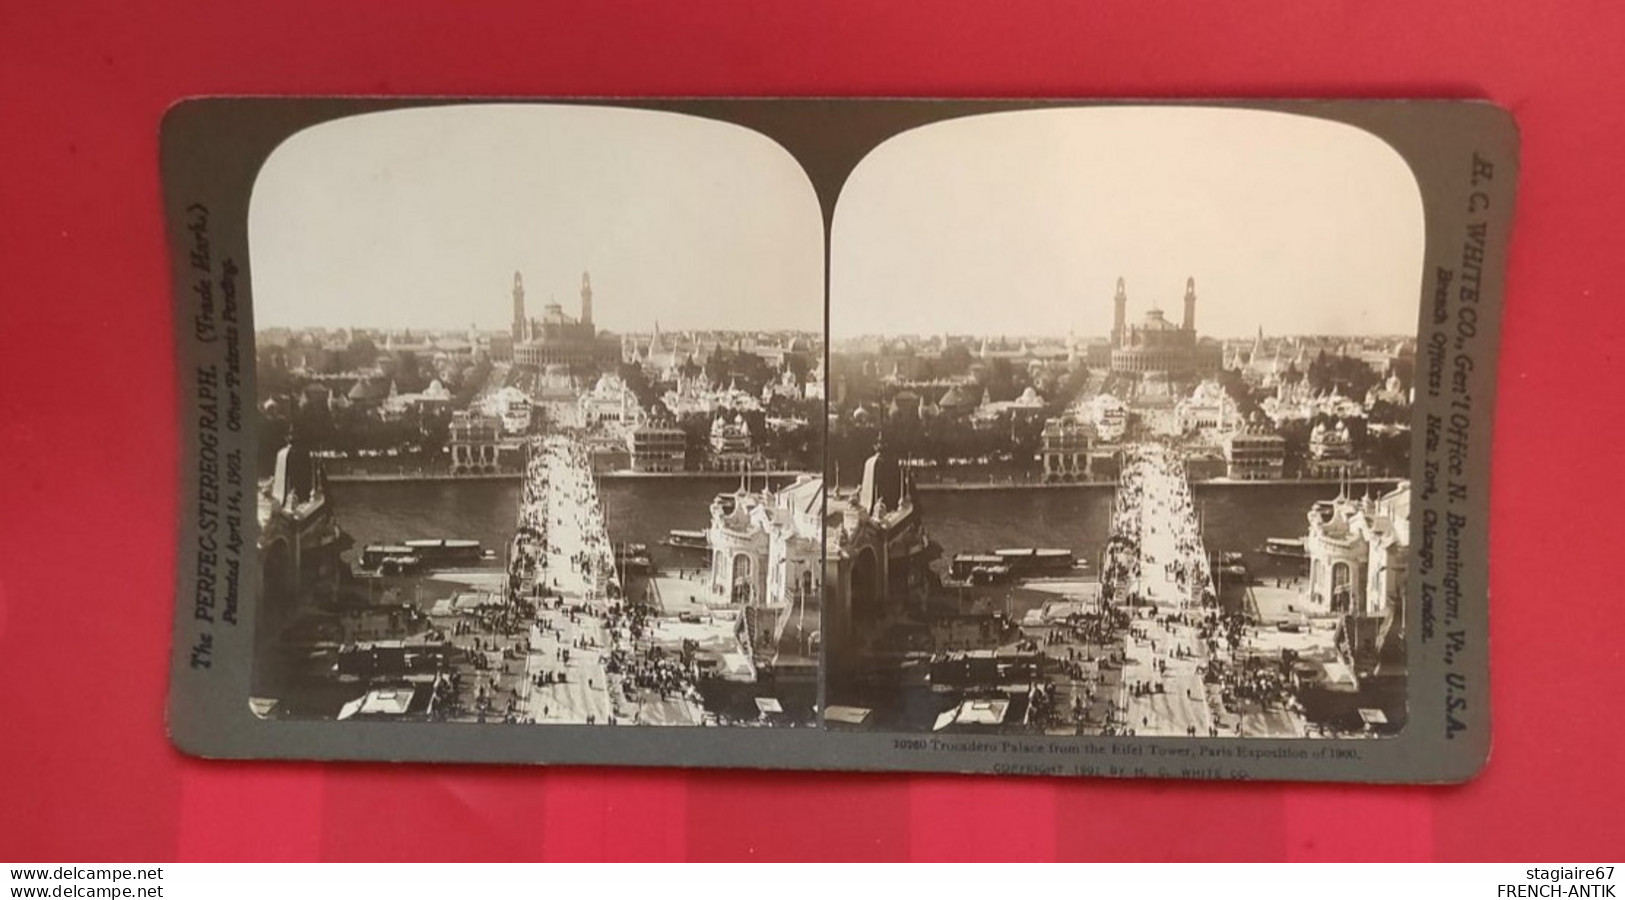 STÉRÉO H.C. WHITE CO USA TROCADERO PALACE FROM THE EIFEL TOWER PARIS EXPOSITION OF 1900 - Fotos Estereoscópicas